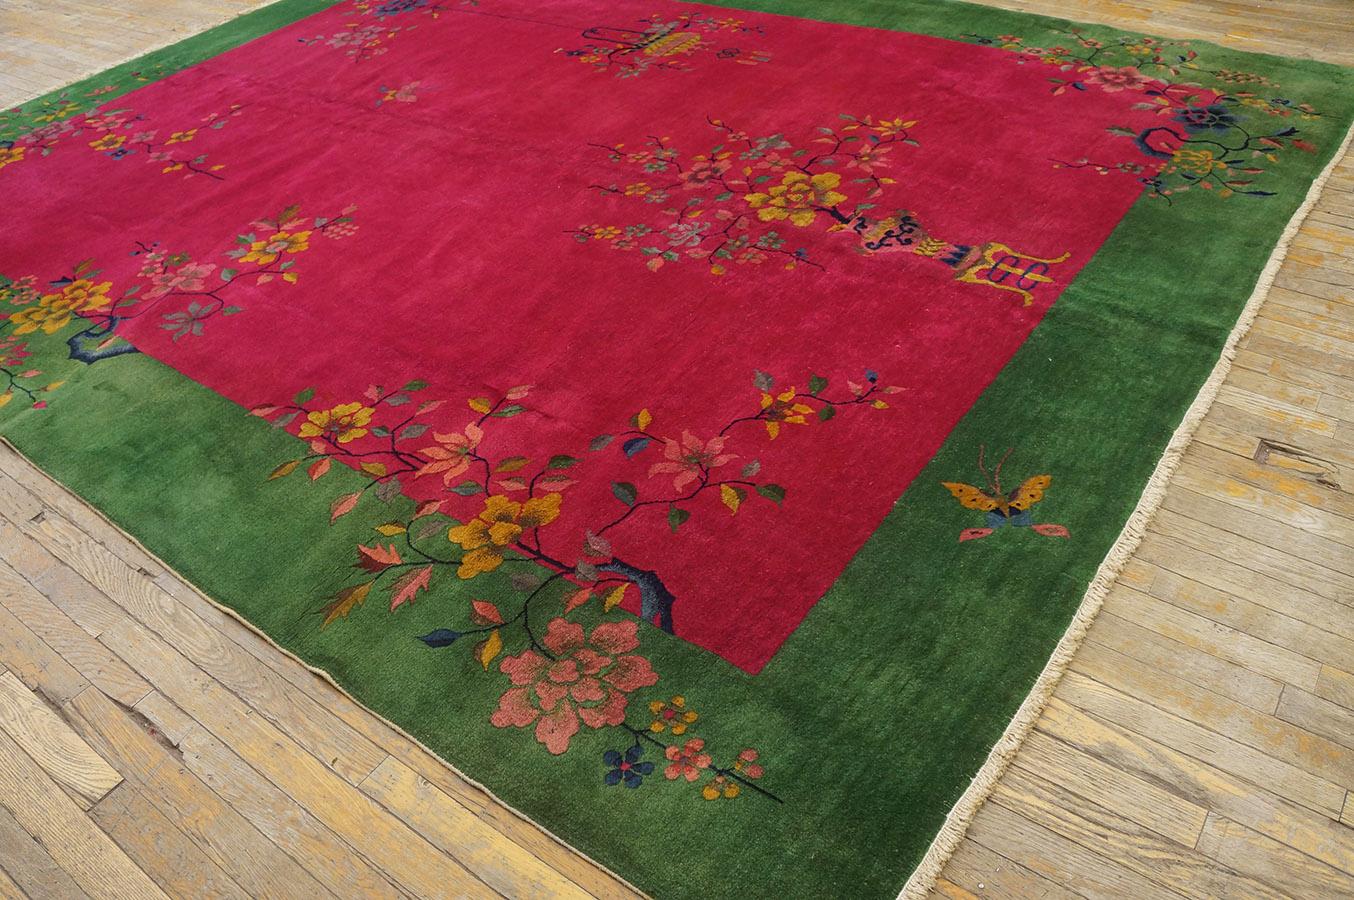 1920s Chinese Art Deco Carpet ( 9' x 11' 6'' - 275 x 350 cm ) For Sale 2